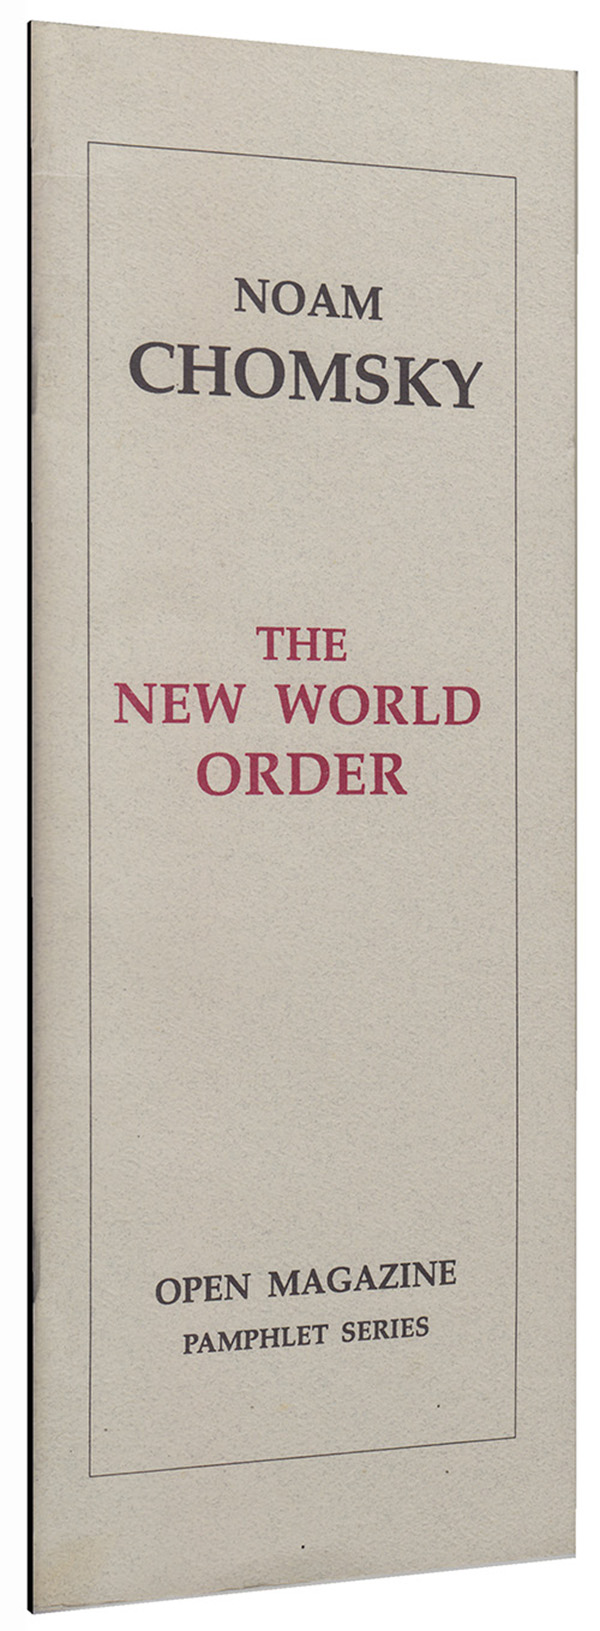 Chomsky, Noam - The New World Order (Open Magazine Pamphlet Series)